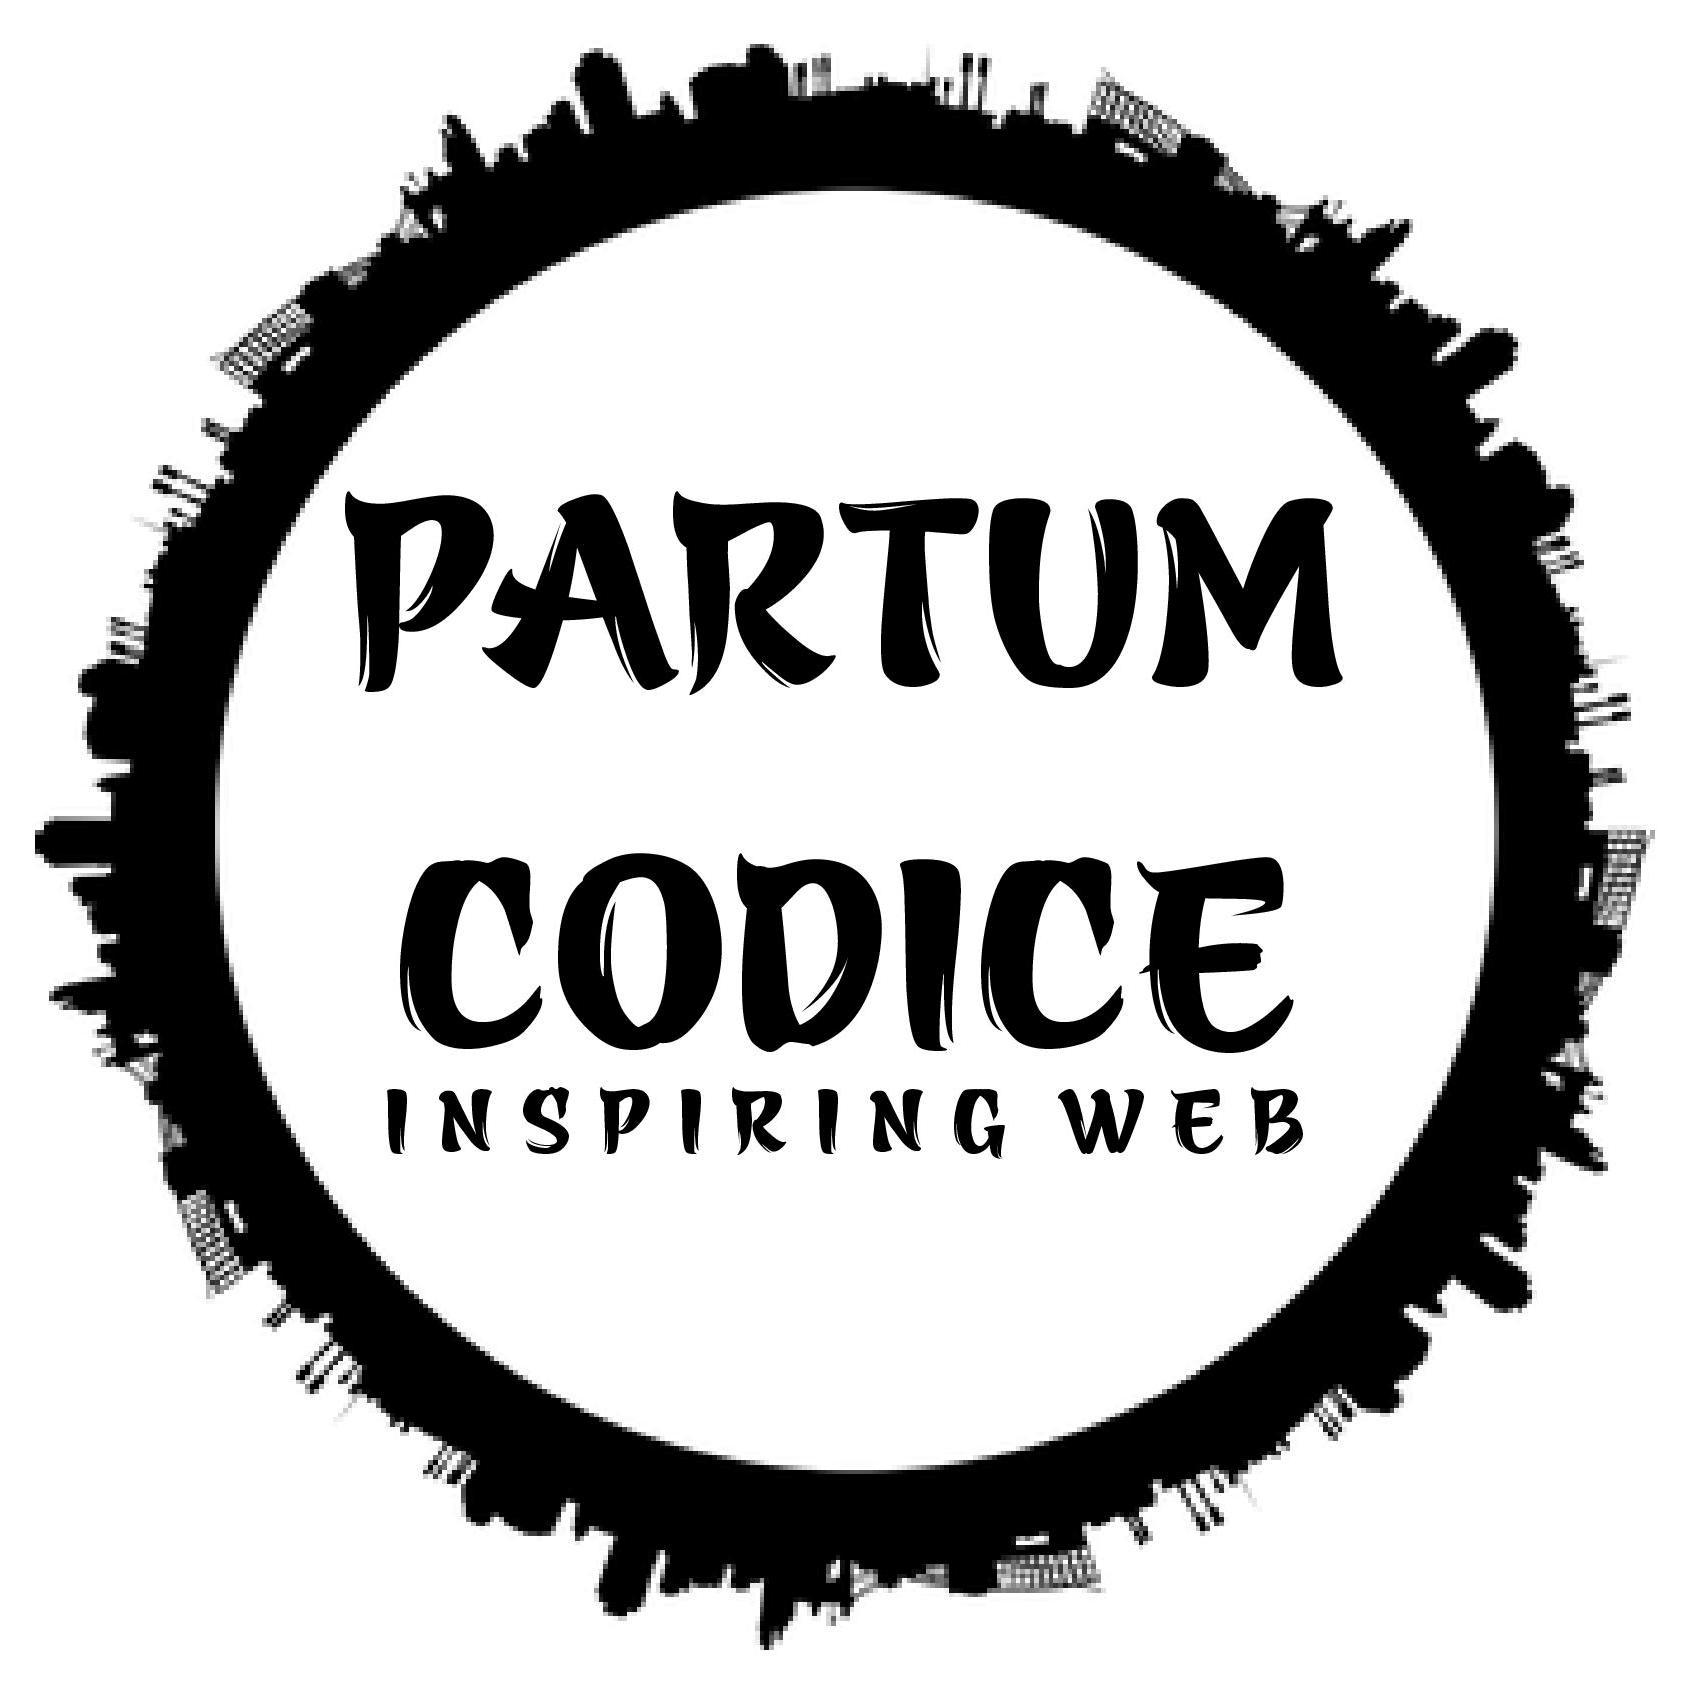 Partum Codice profile on Qualified.One